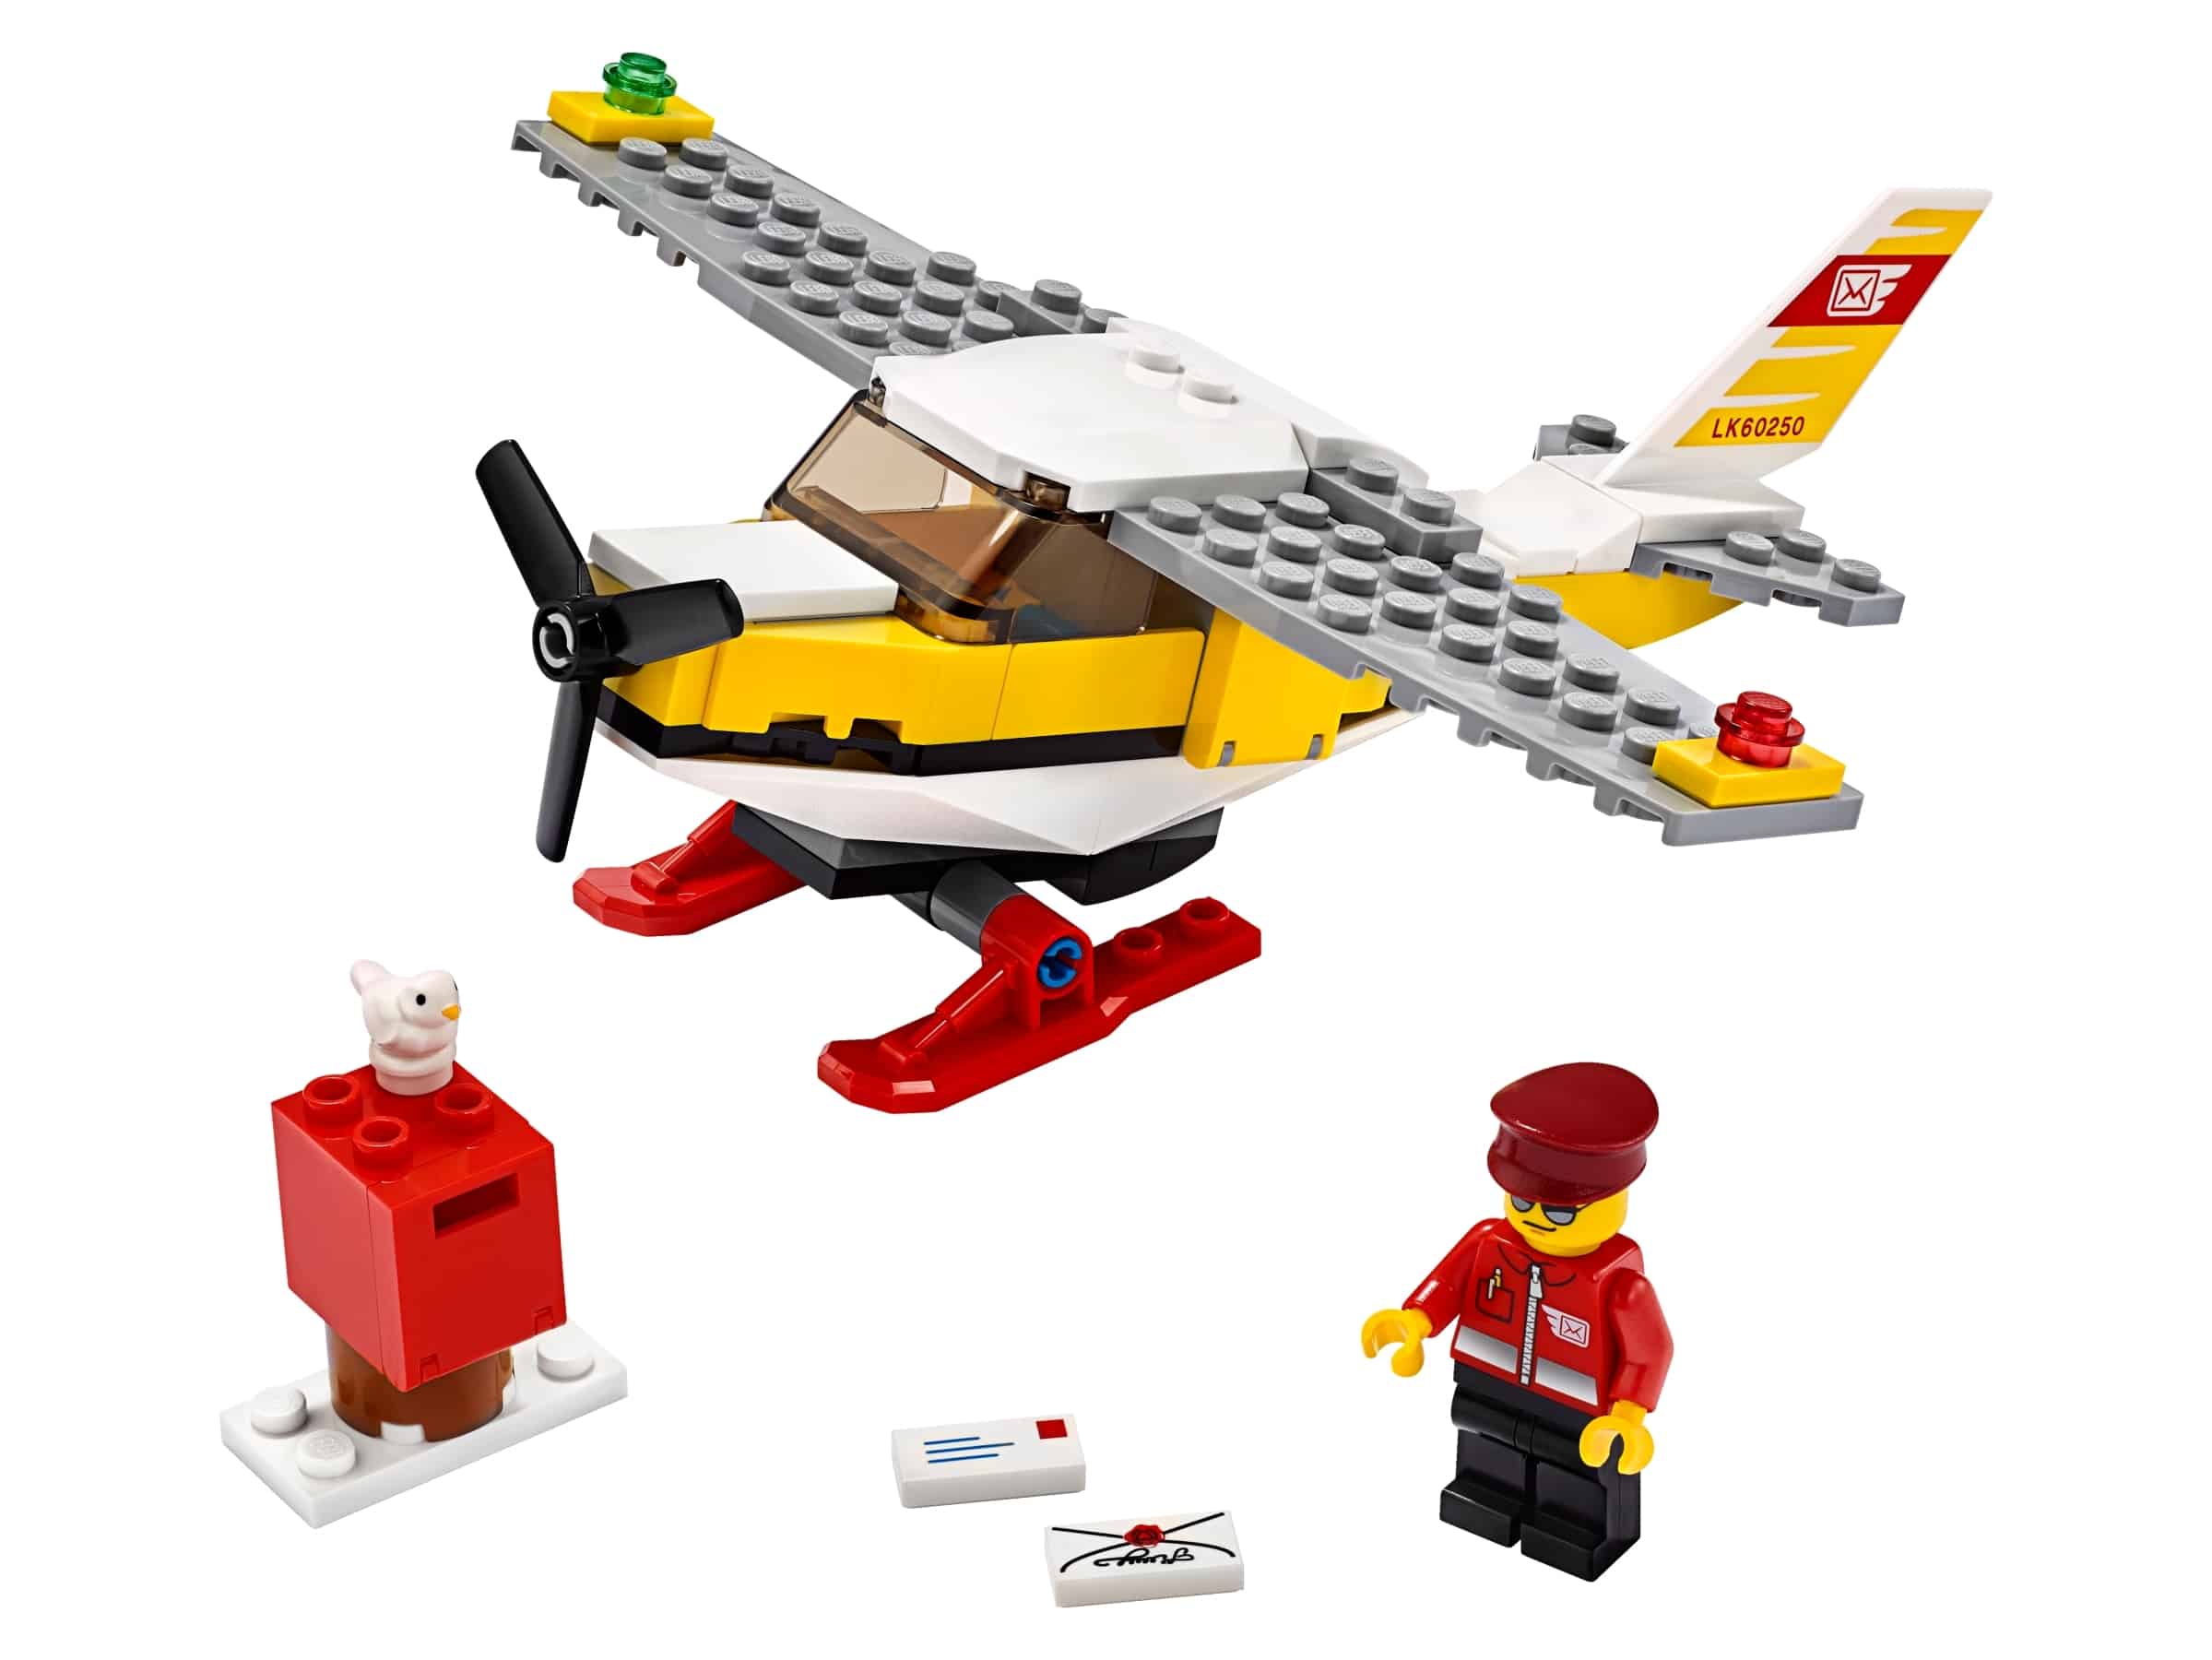 Lego Postvliegtuig 60250